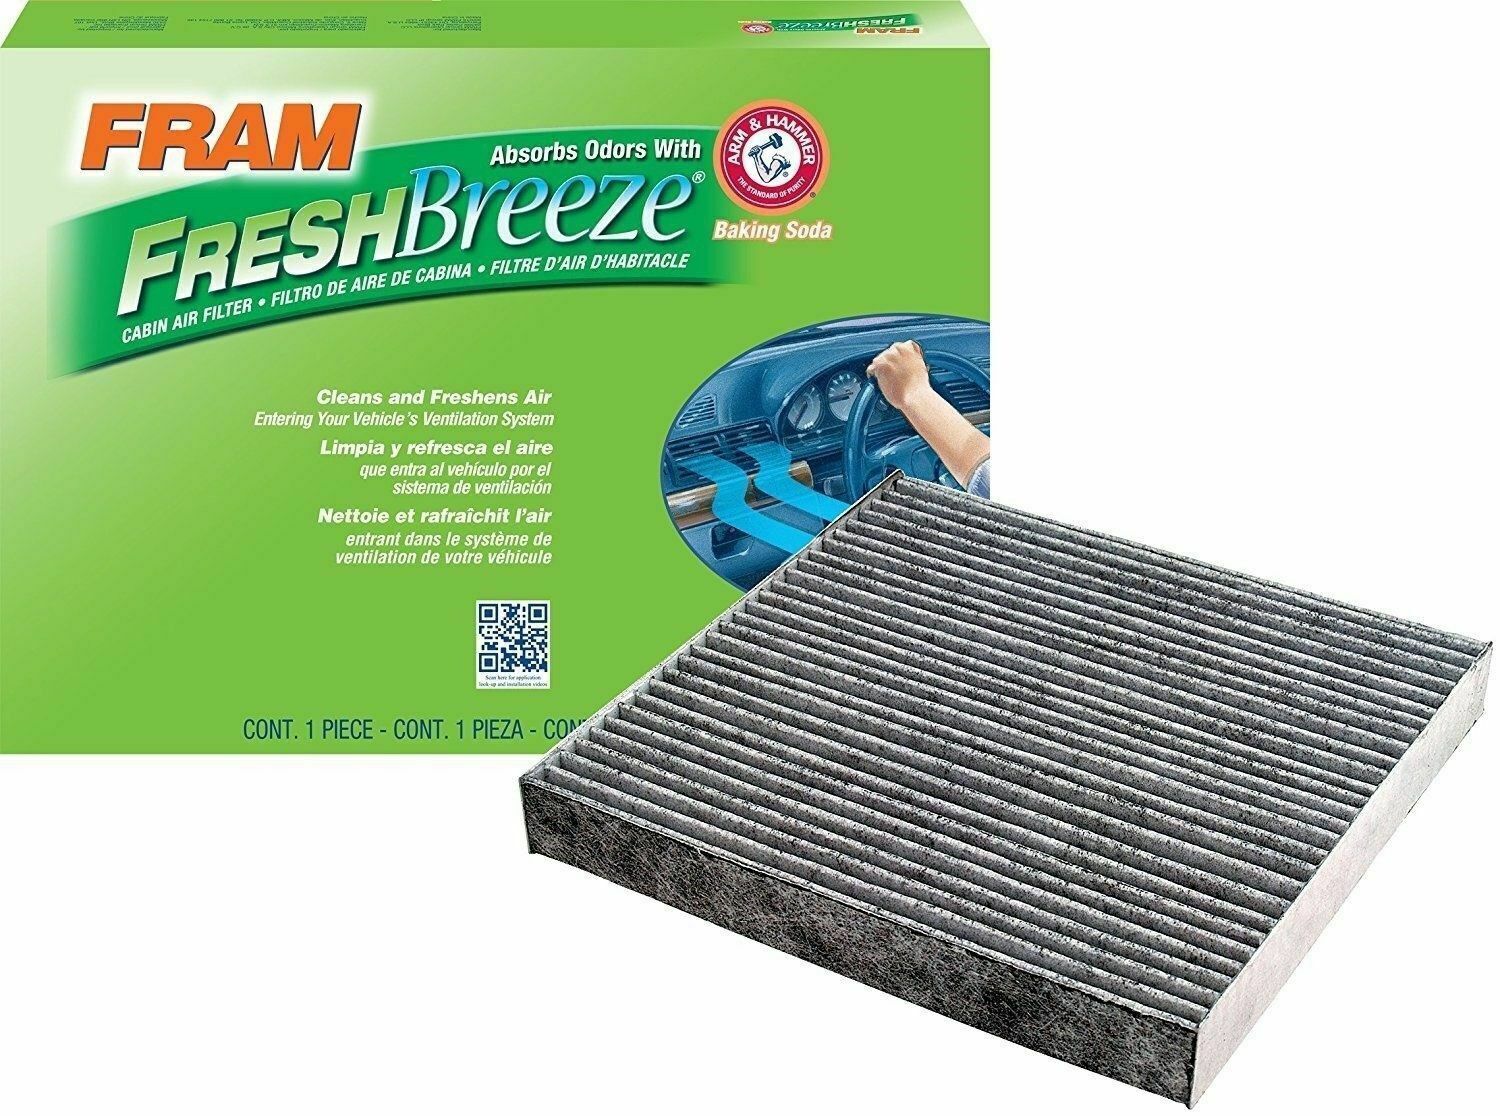 FRAM Fresh Breeze Cabin Air Filter For Honda Acura Easy Install Air Filter